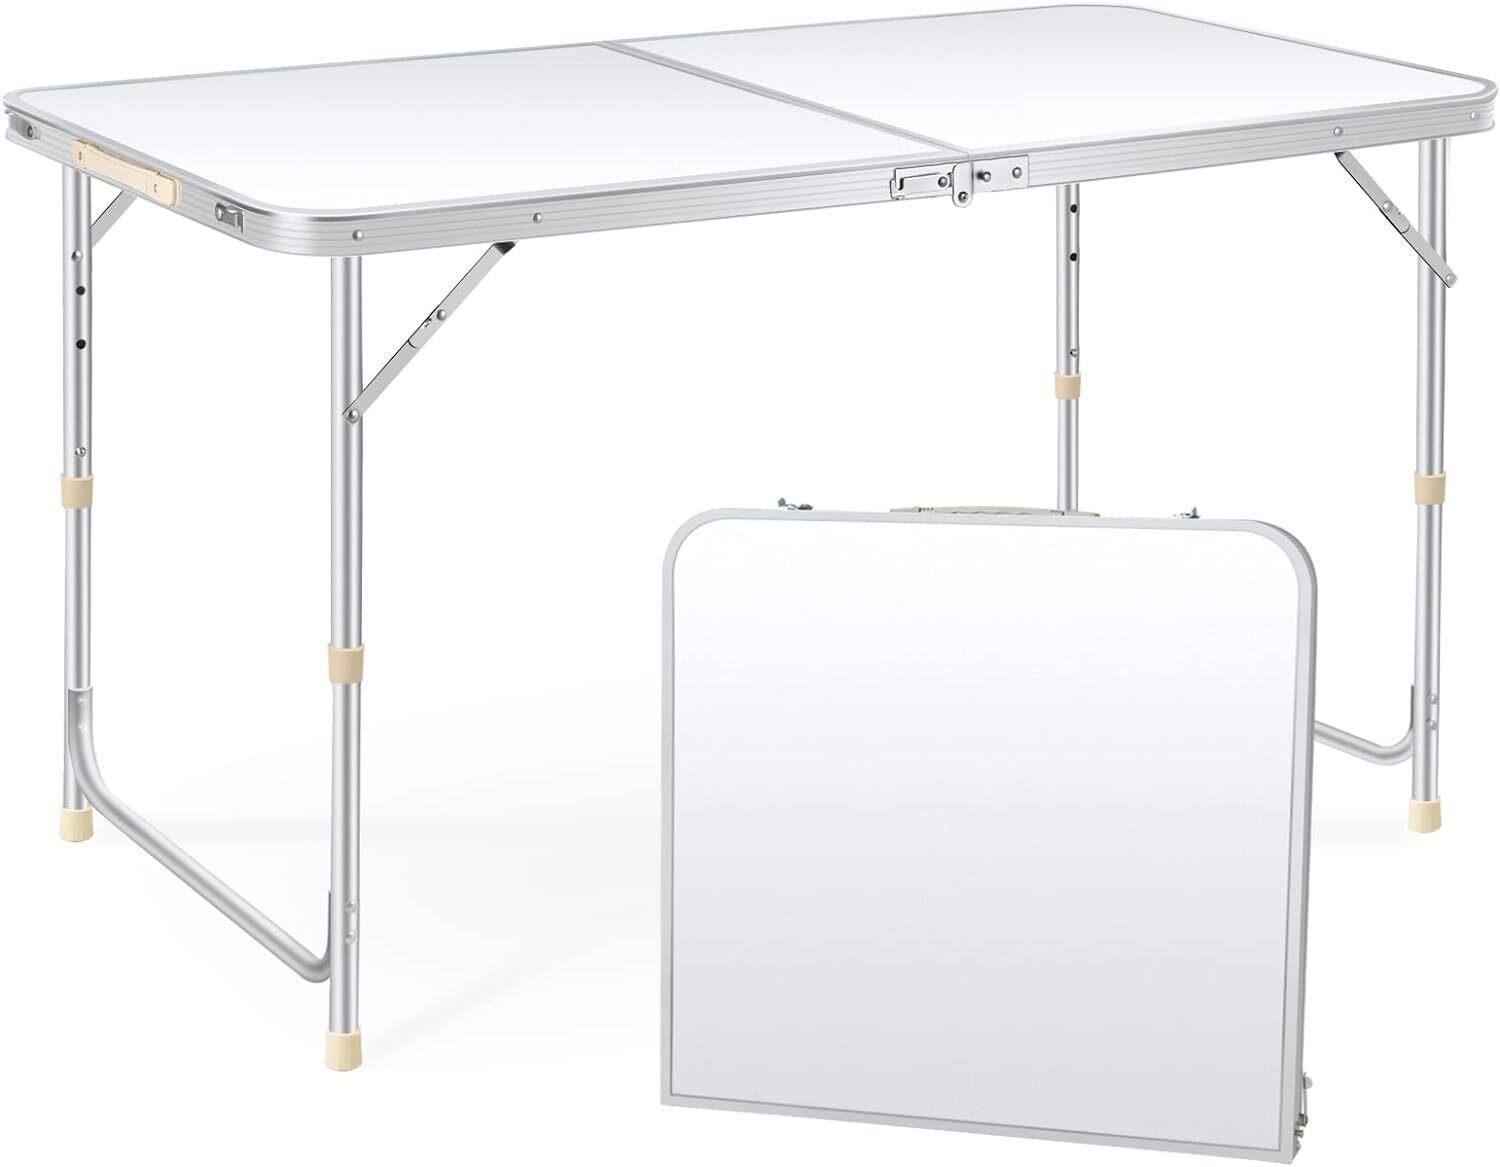 PINK Folding Table 4 Foot x 26 inch Fold-in-Half F